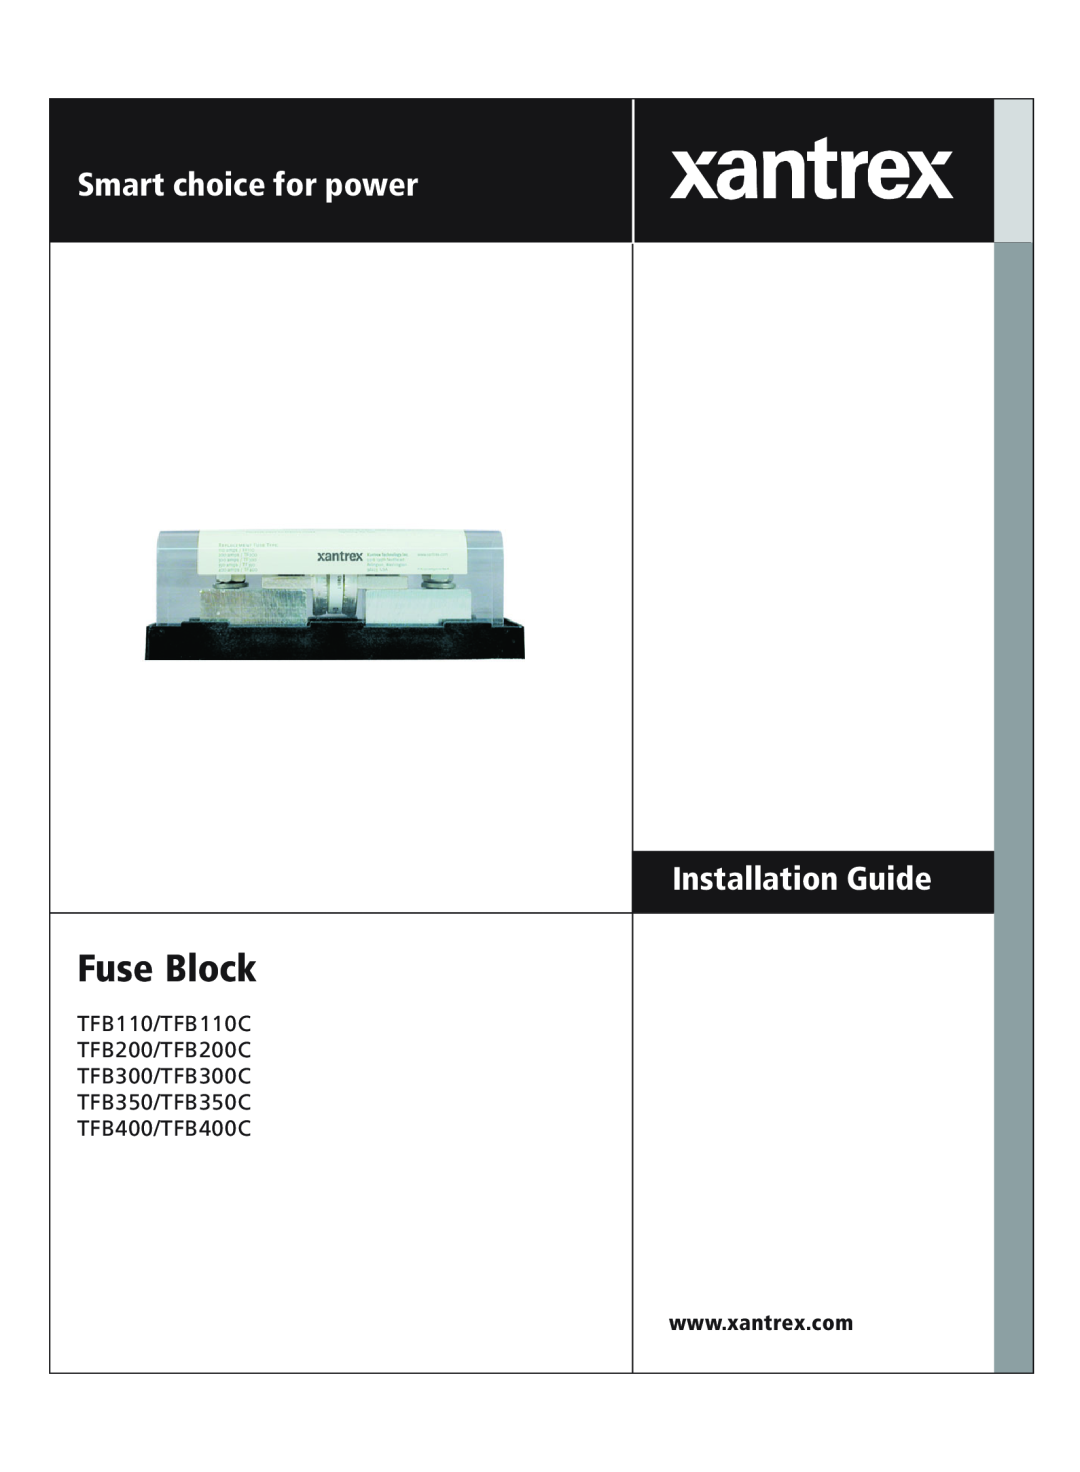 Xantrex Technology TFB350C, TFB300C, TFB200C manual Smart choice for power Installation Guide, Fuse Block, TFB400/TFB400C 